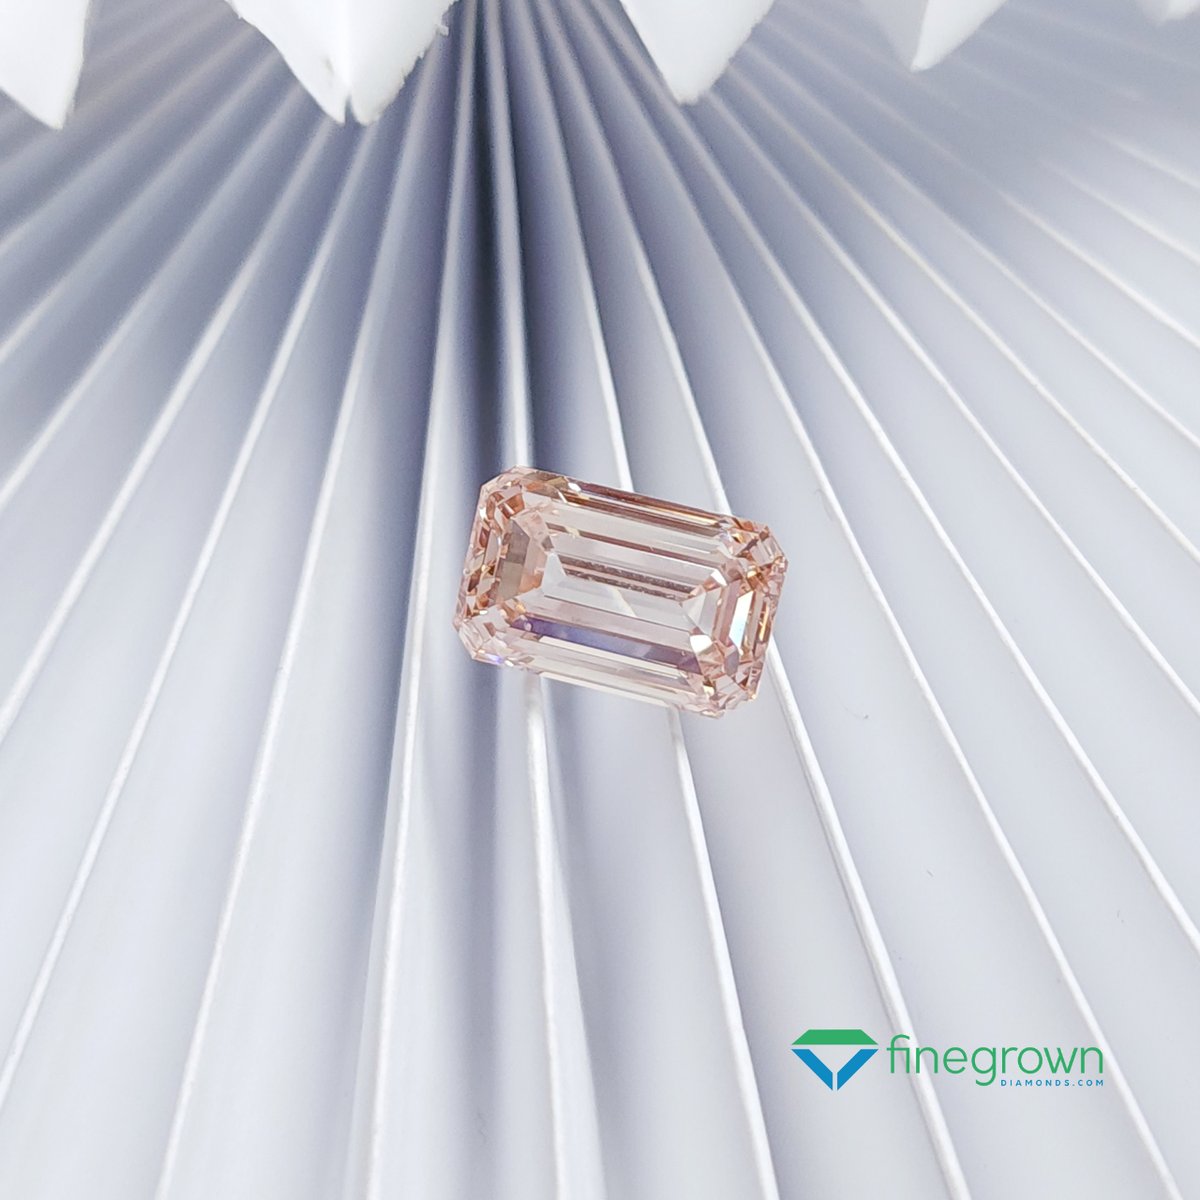 ✨ Add a pop of color to your collection with our exquisite Vivid Pink Emerald Shape Lab Diamond! 💖💎

#LabDiamonds #JewelryObsessed #PinkDiamonds #EmeraldCut #VividPink #LuxuryJewelry #StatementPiece #GlamorousLife 
#finegrowndiamonds